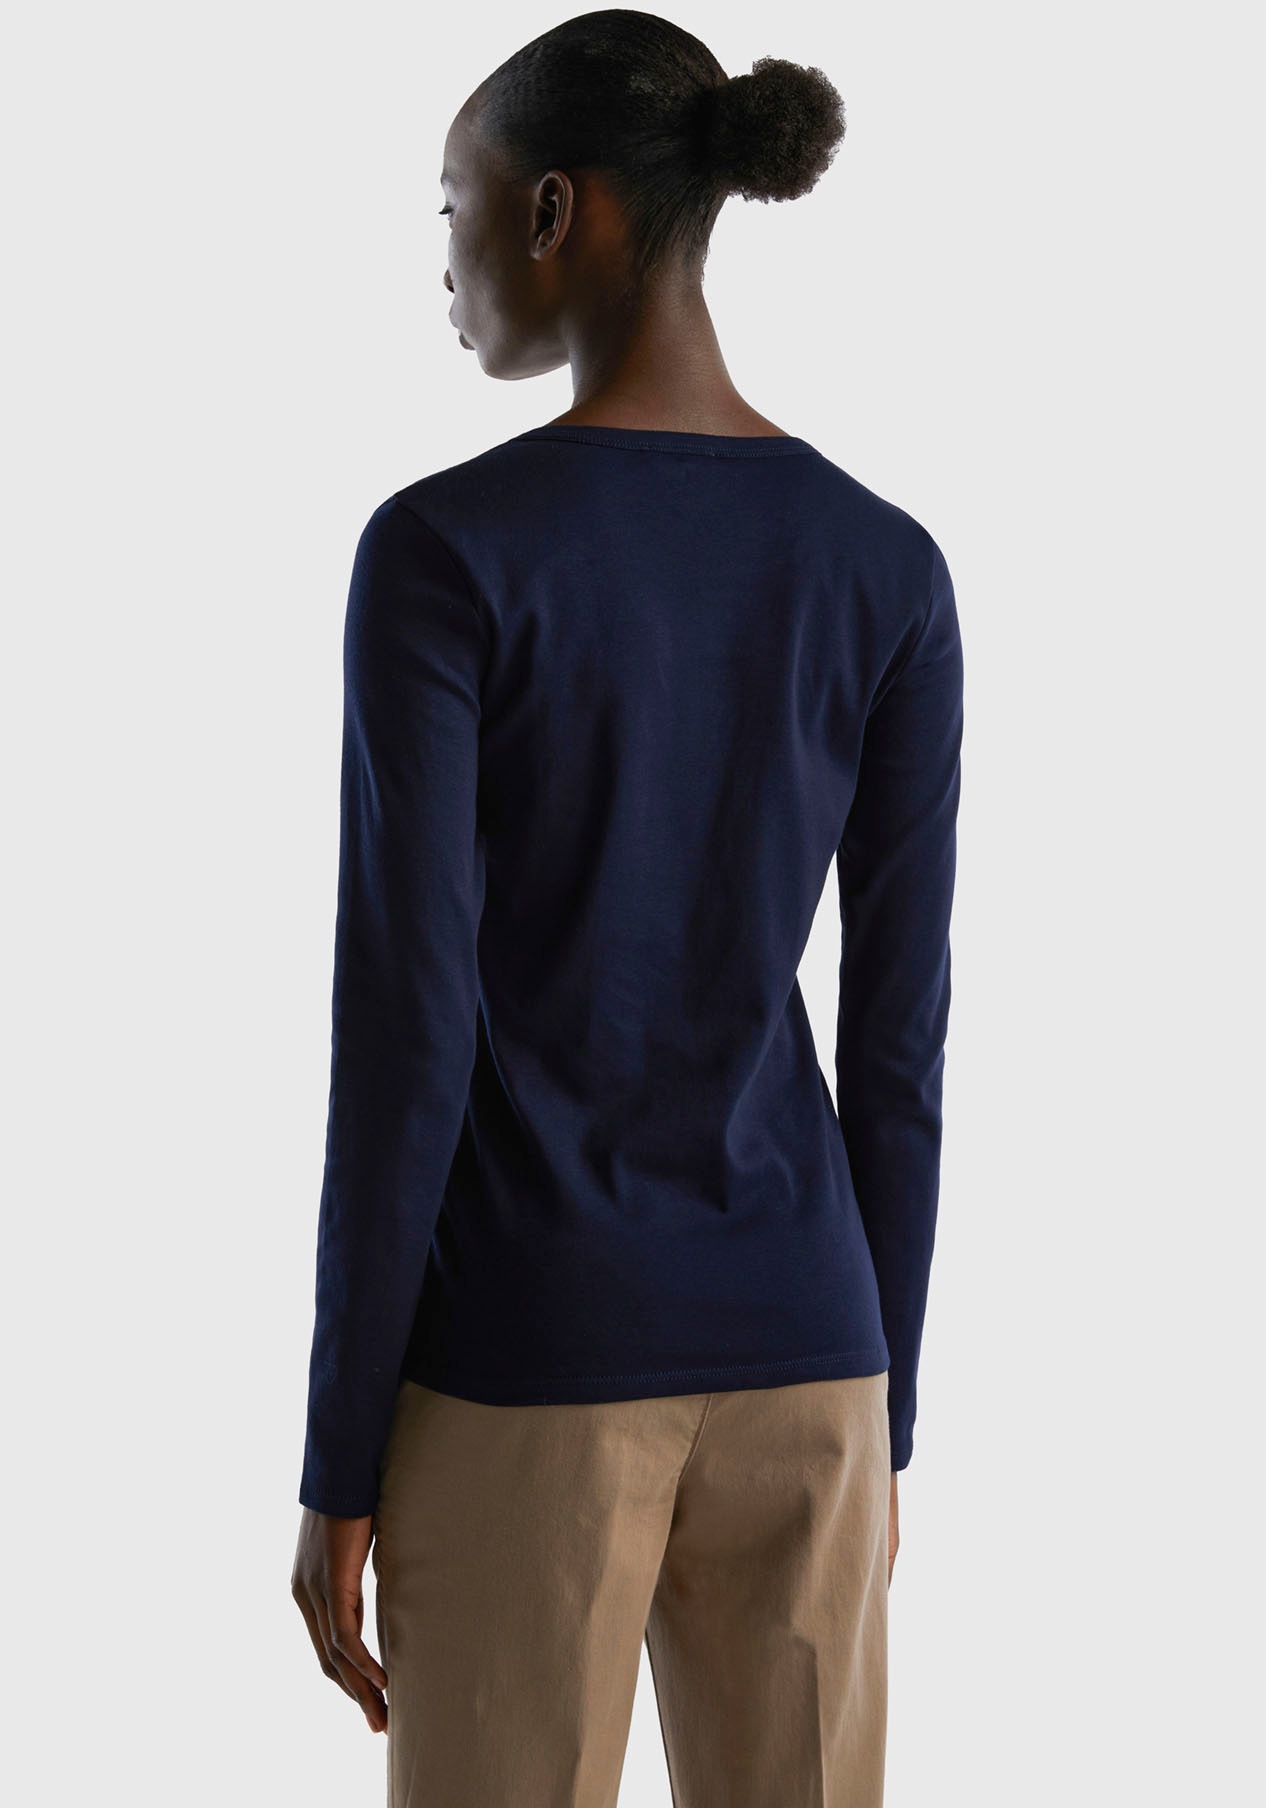 United Colors of Basic-Look im online Benetton Langarmshirt, bestellen bei OTTO